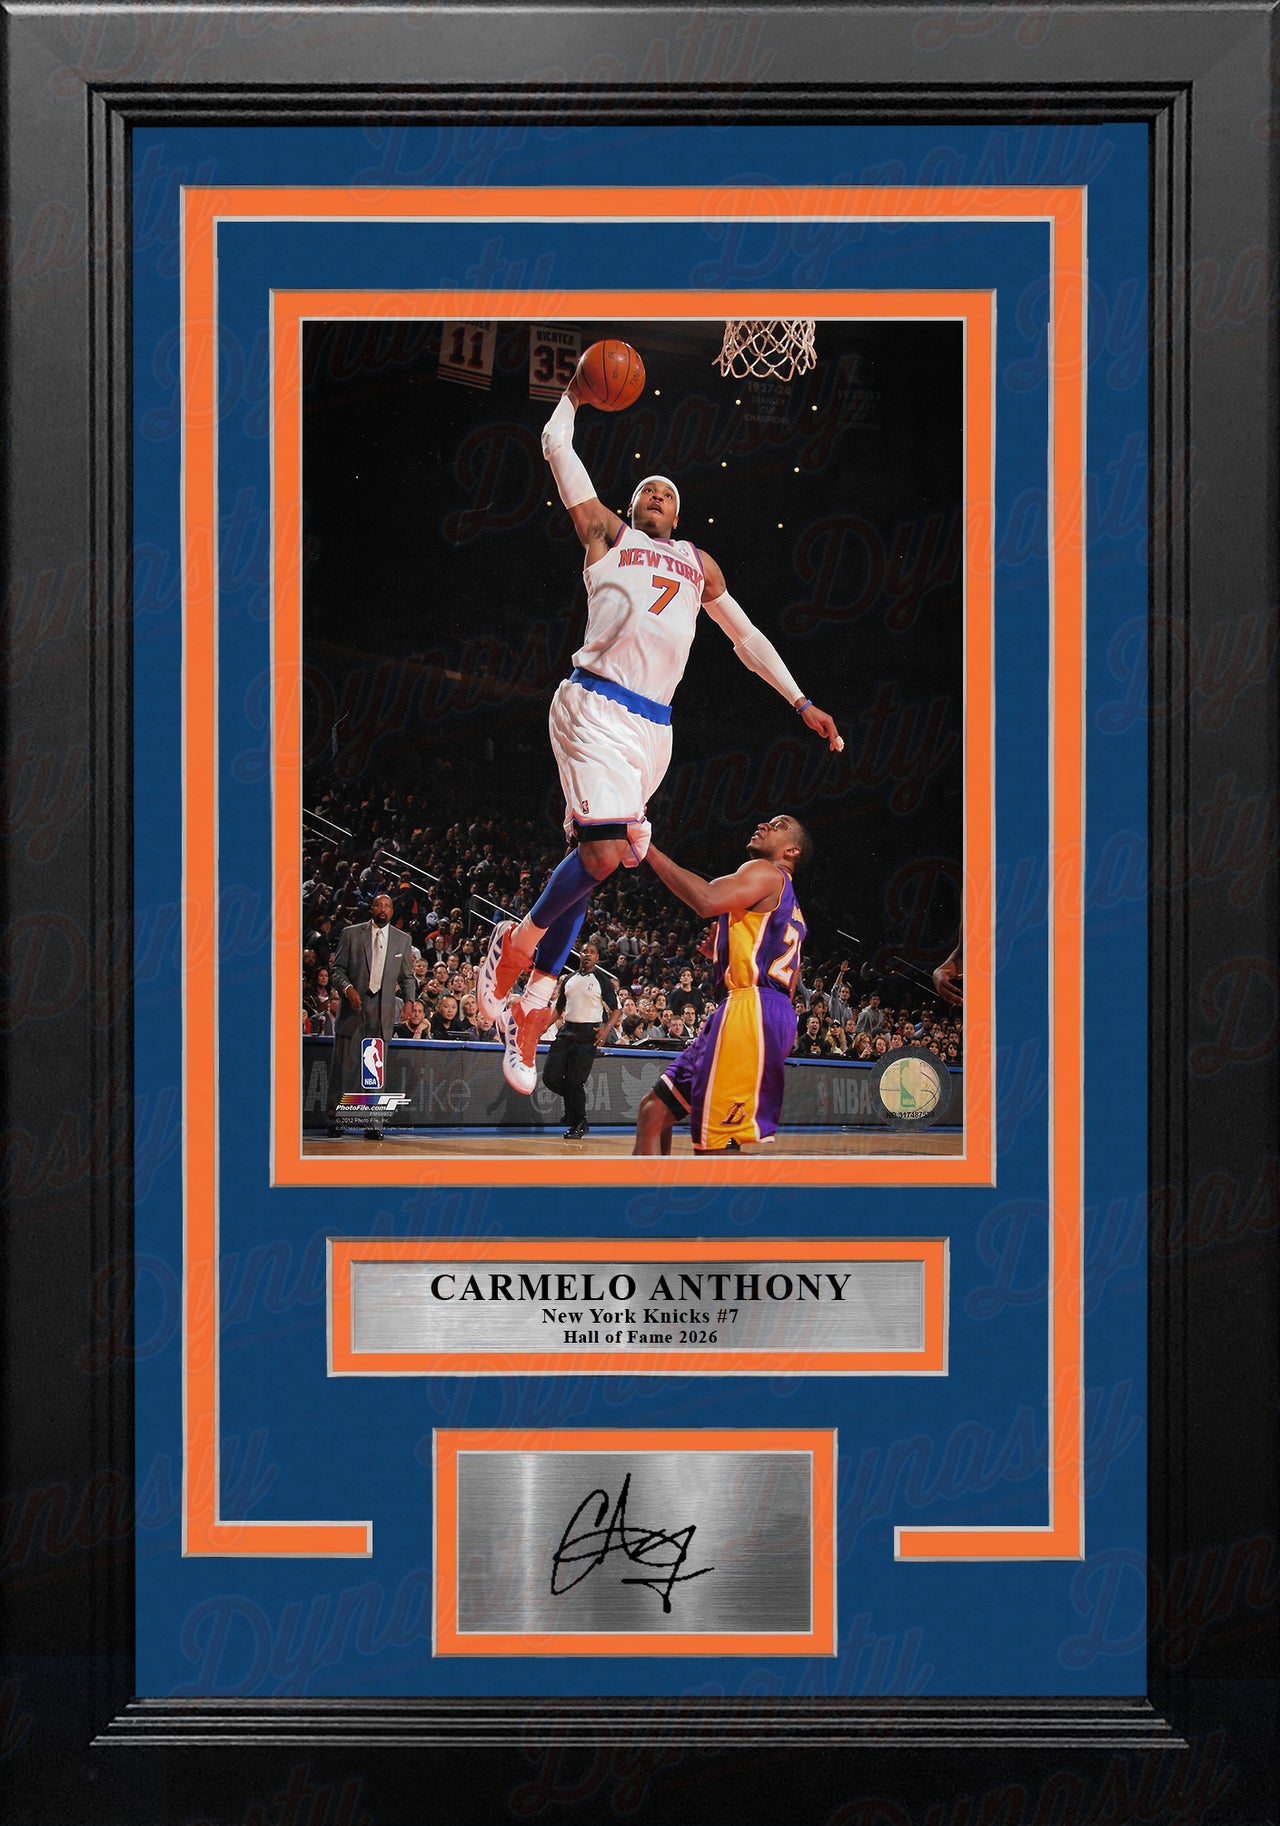 Carmelo Anthony Slam Dunk New York Knicks 8x10 Framed Basketball Photo with Engraved Autograph - Dynasty Sports & Framing 